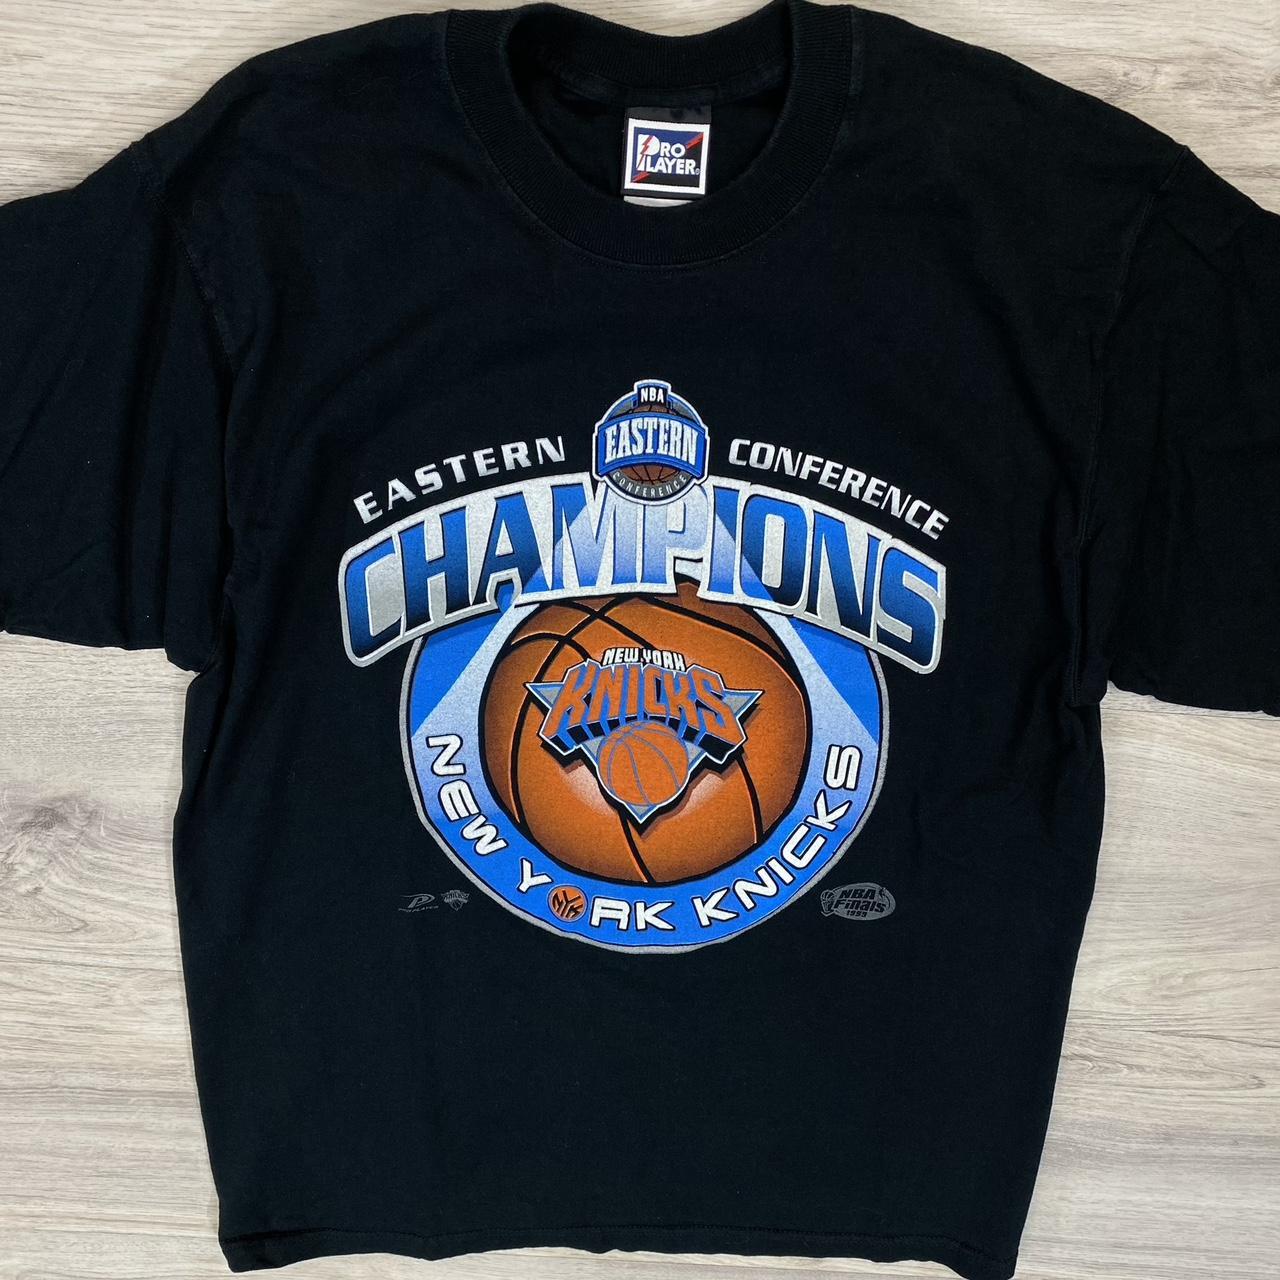 Official Vintage Nba New York Knicks Eastern Champions 1999 Shirt